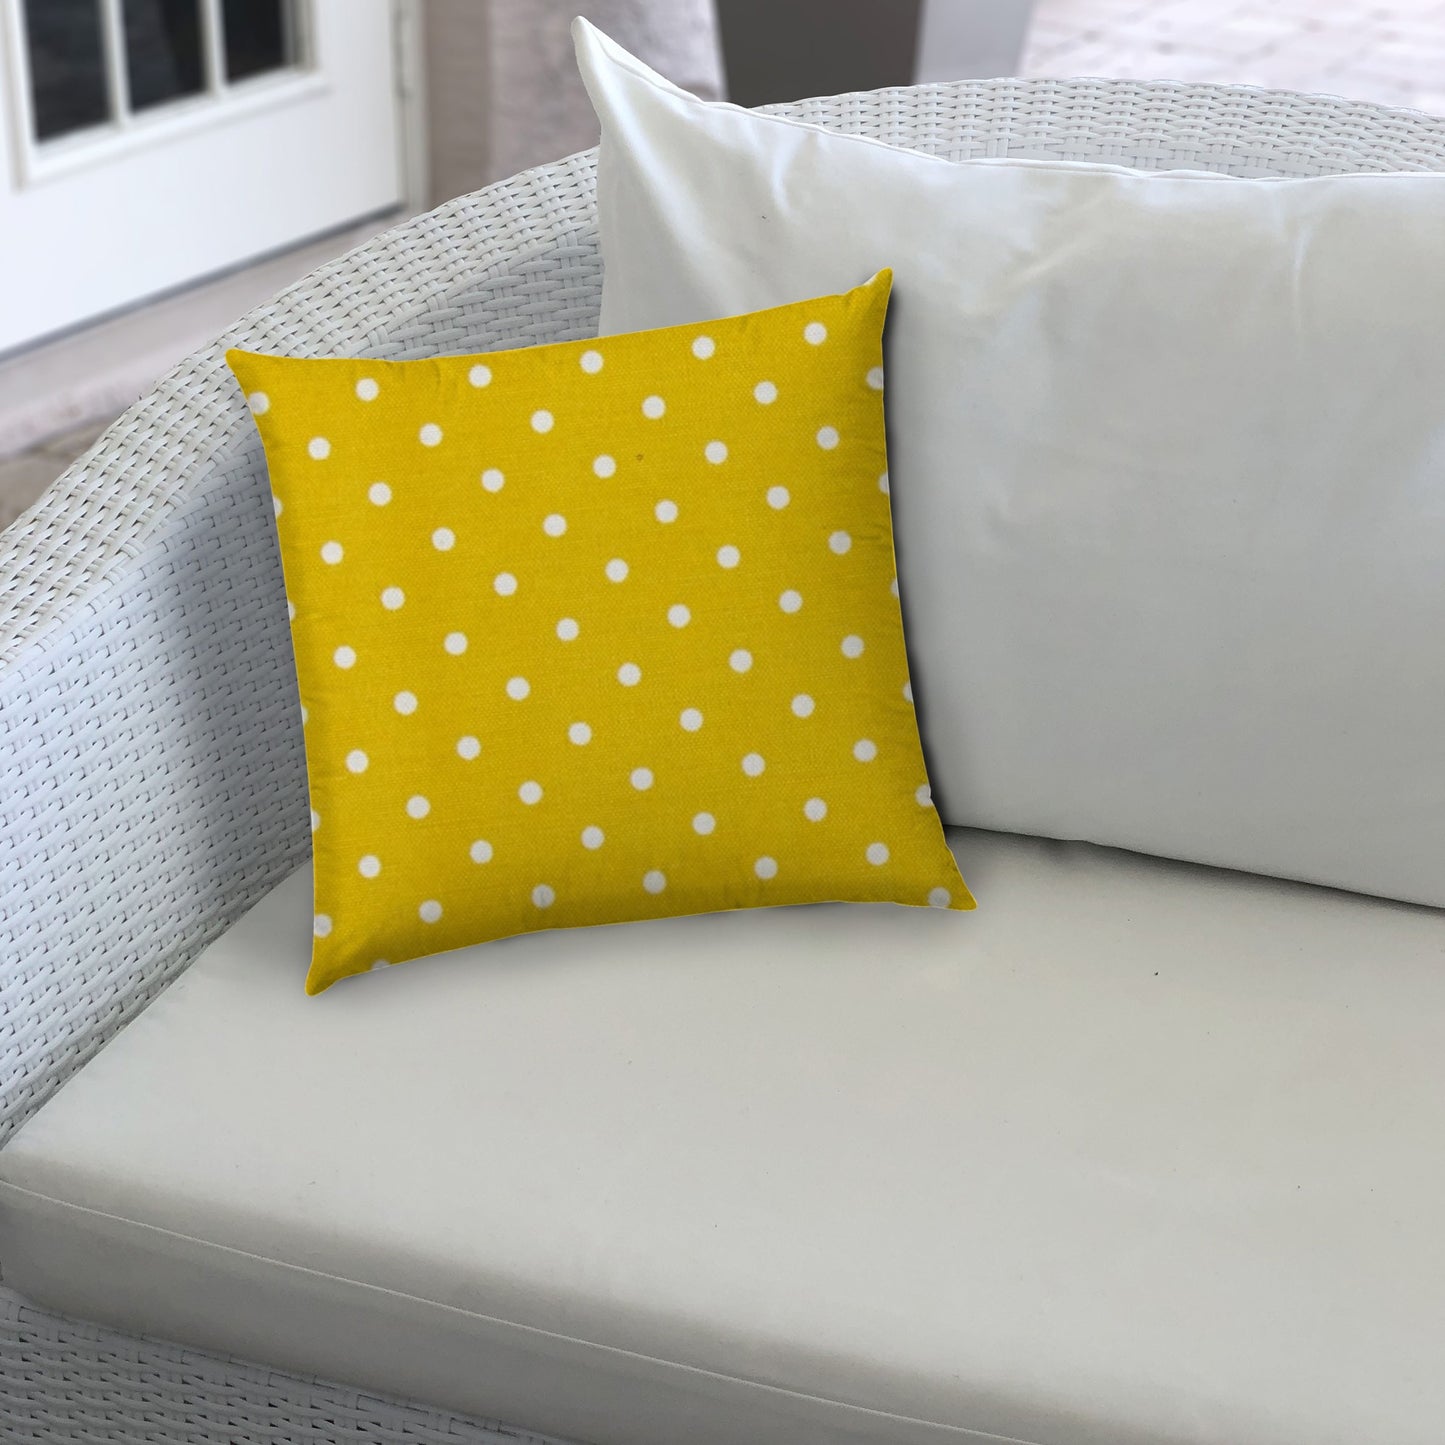 14" X 20" White And Yellow Blown Seam Polka Dots Lumbar Indoor Outdoor Pillow